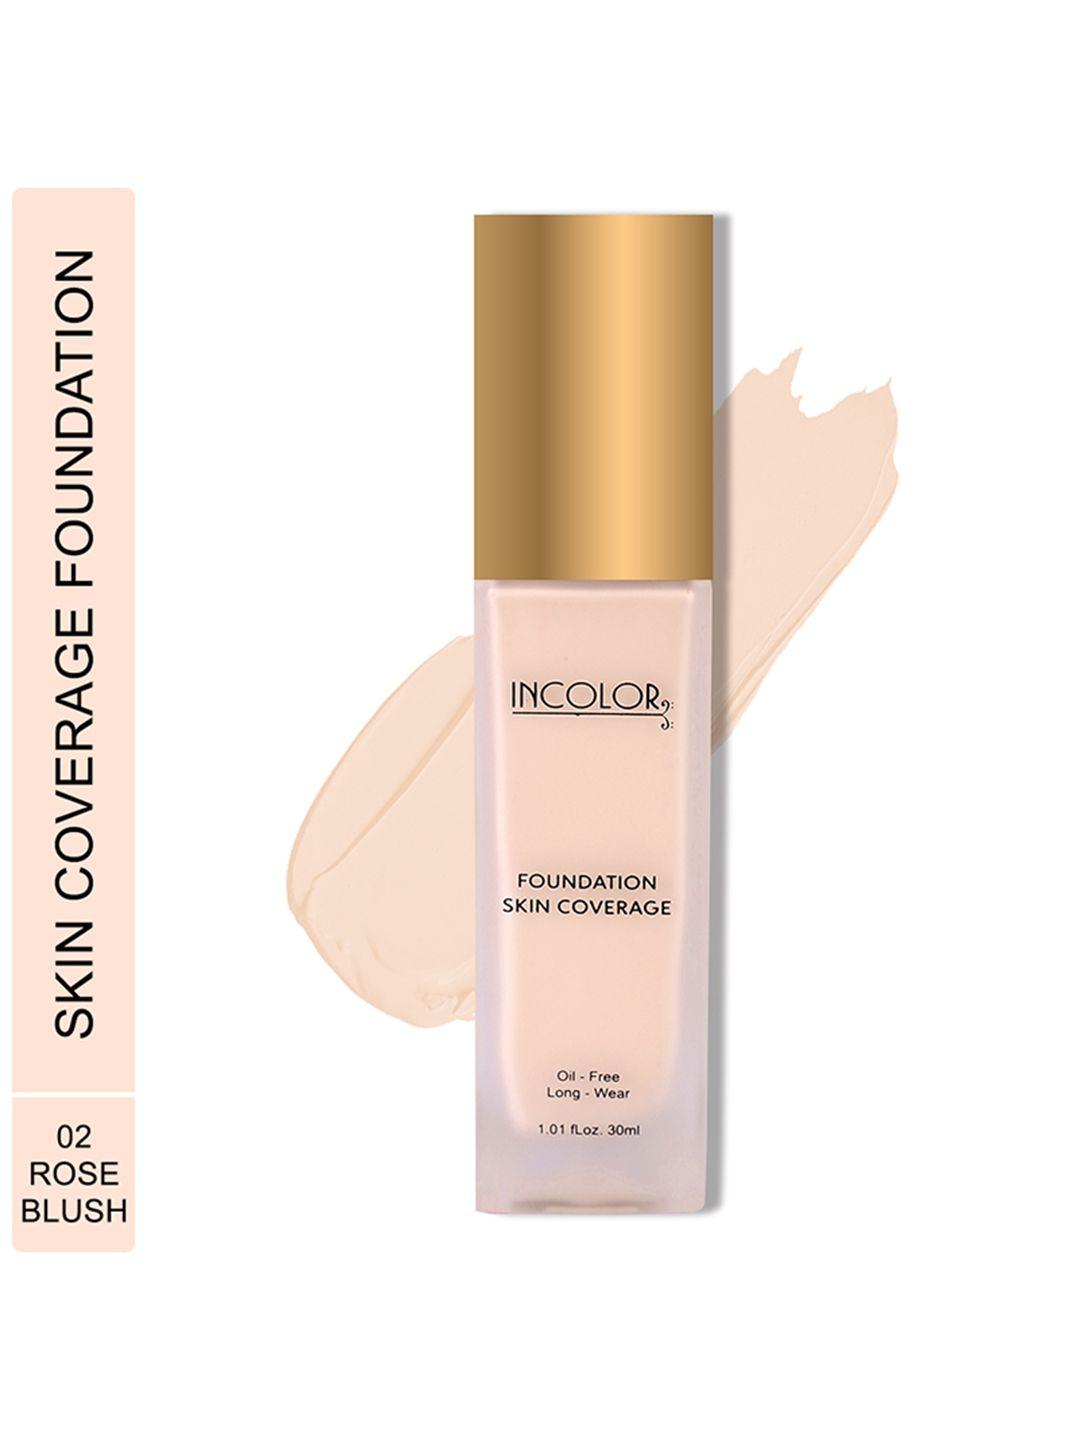 incolor foundation skin coverage  30 ml - rose blush 02